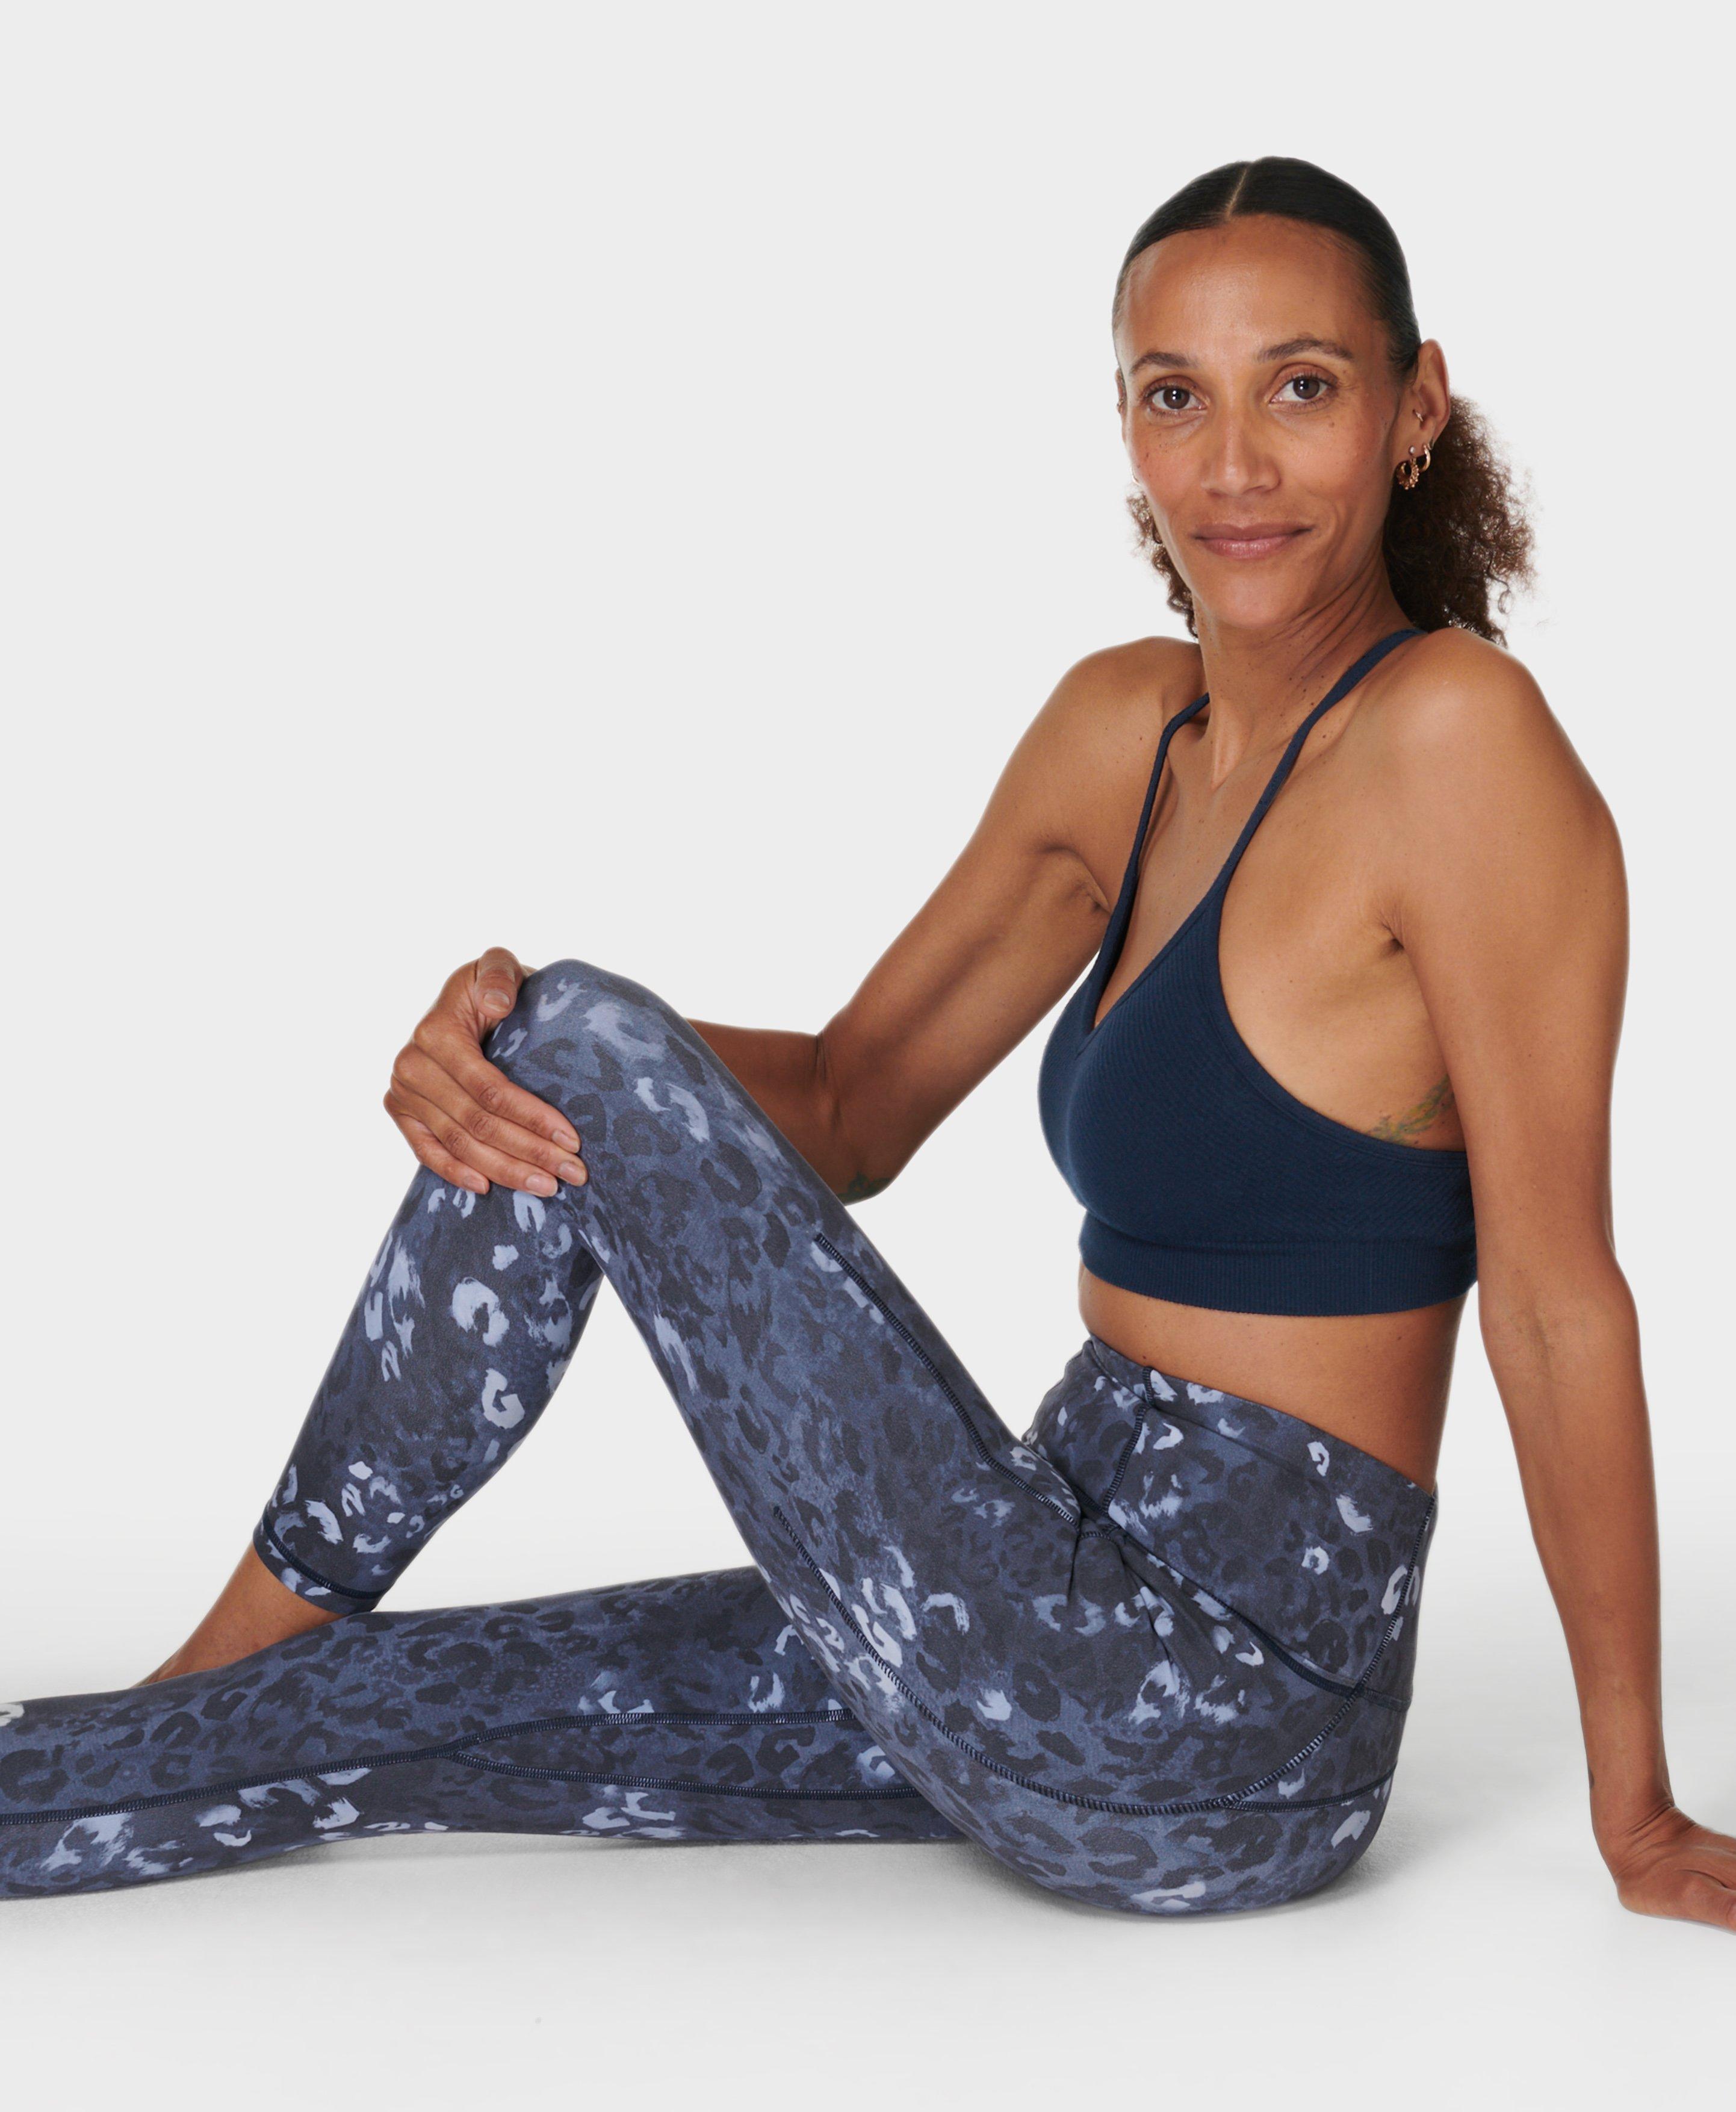 Sport Pants with 2 Packs 3D Printing Leopard Zebra Crocodile Women GYM Yoga  Leggings